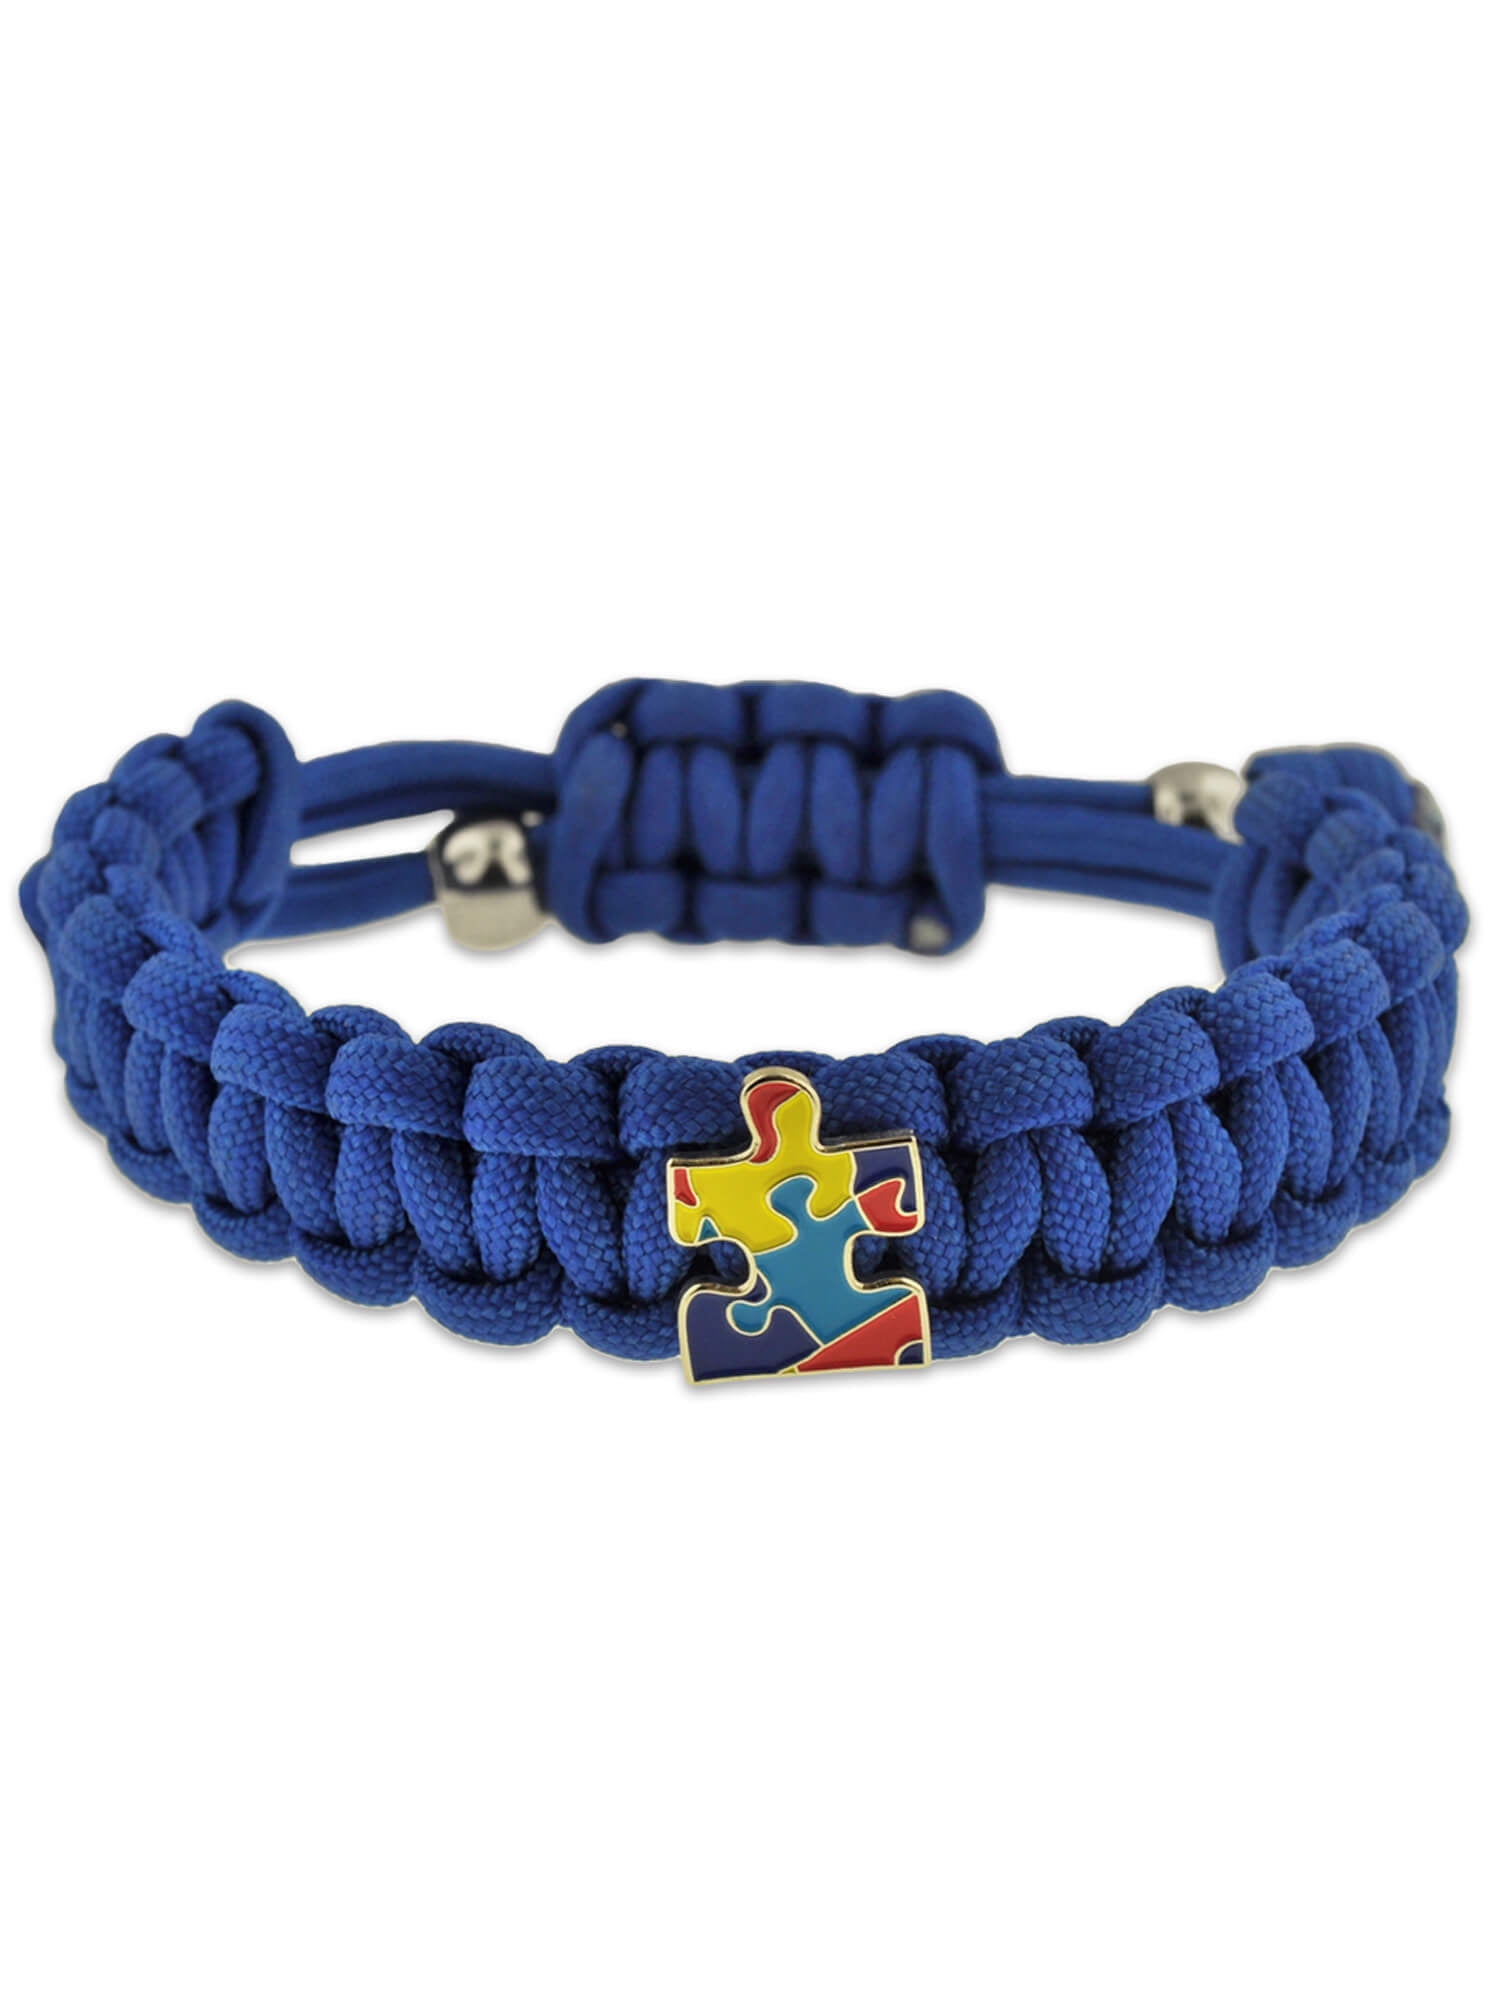 blue bracelet survival bracelet men and women bracelet Paracord bracelet